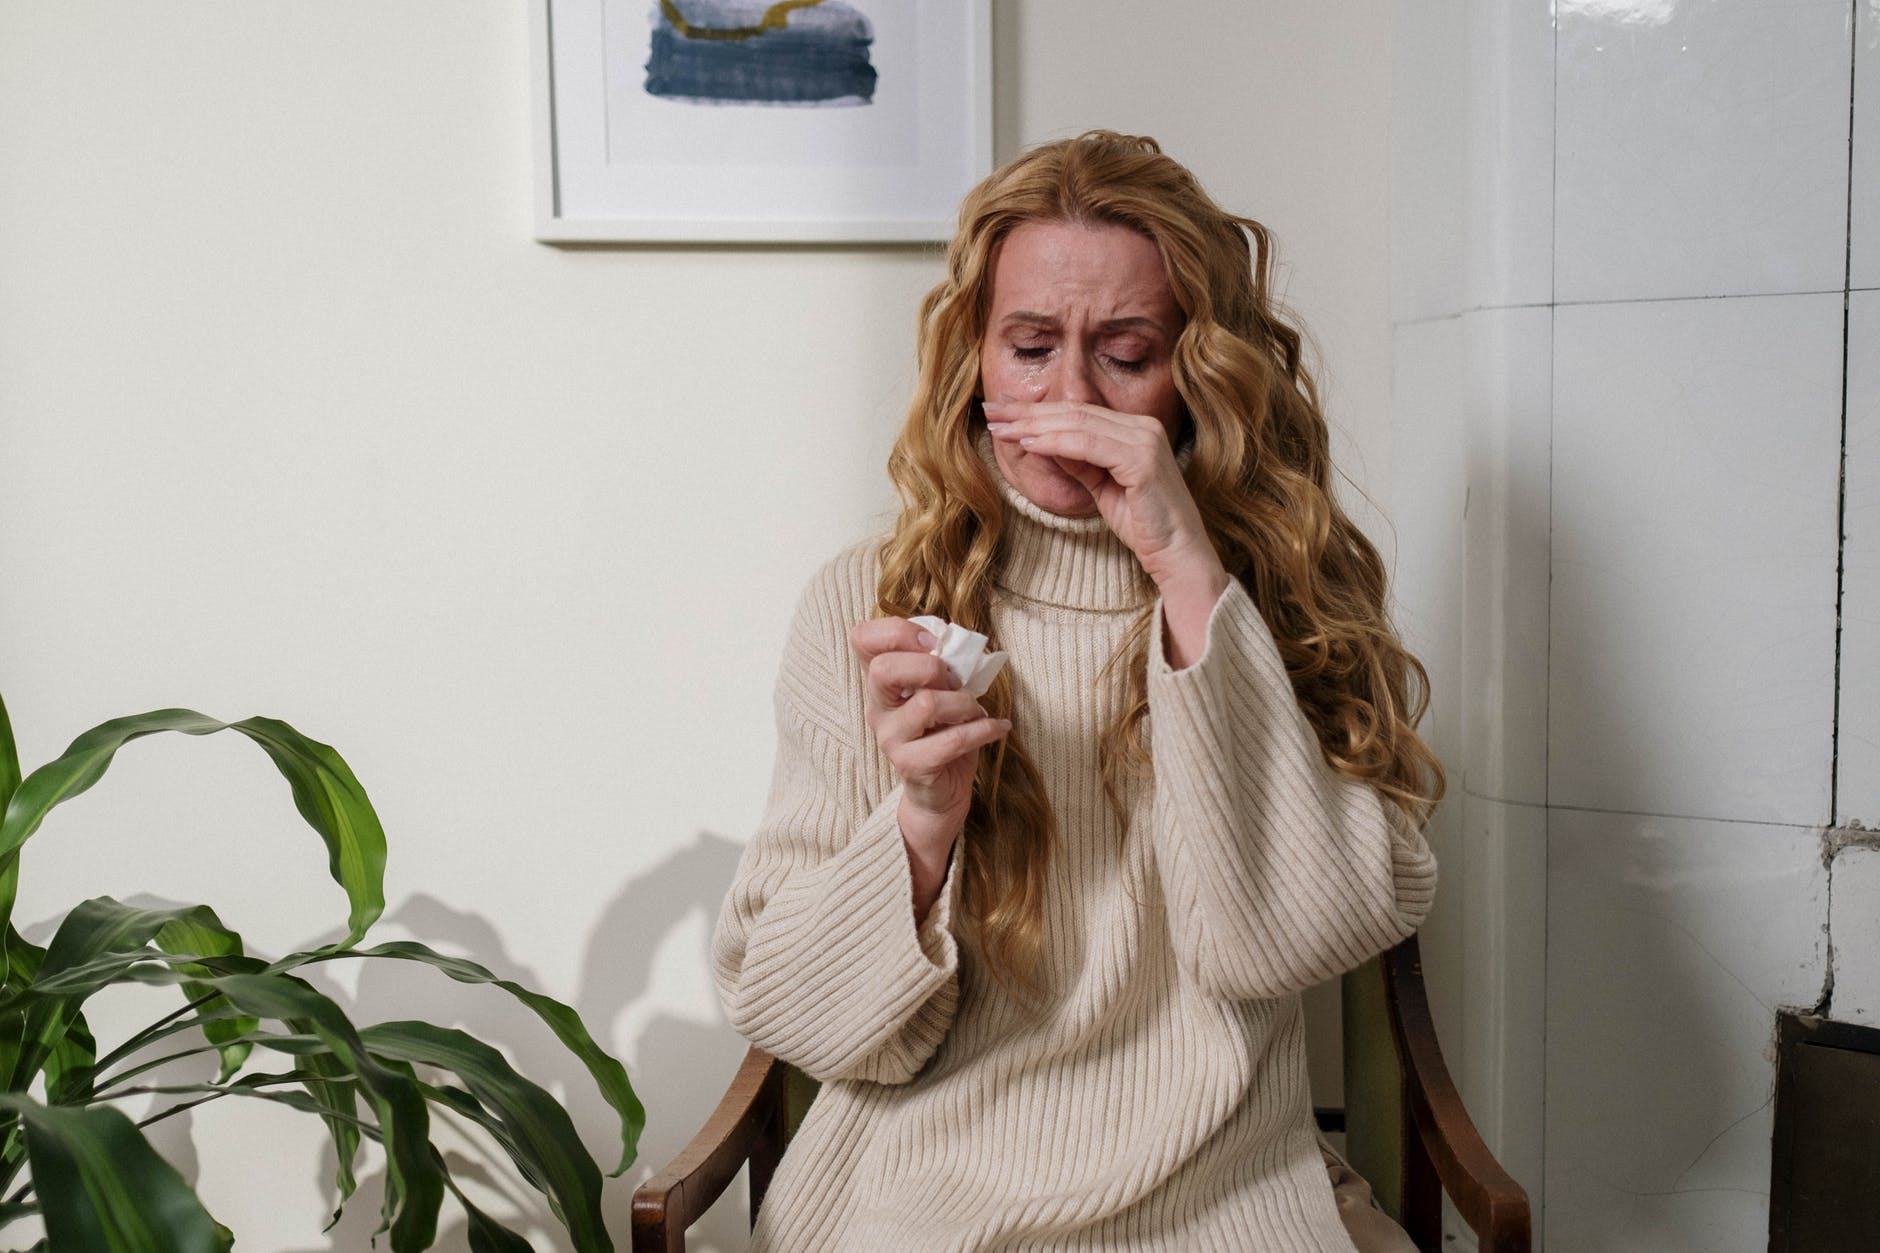 A woman having a severe allergic reaction